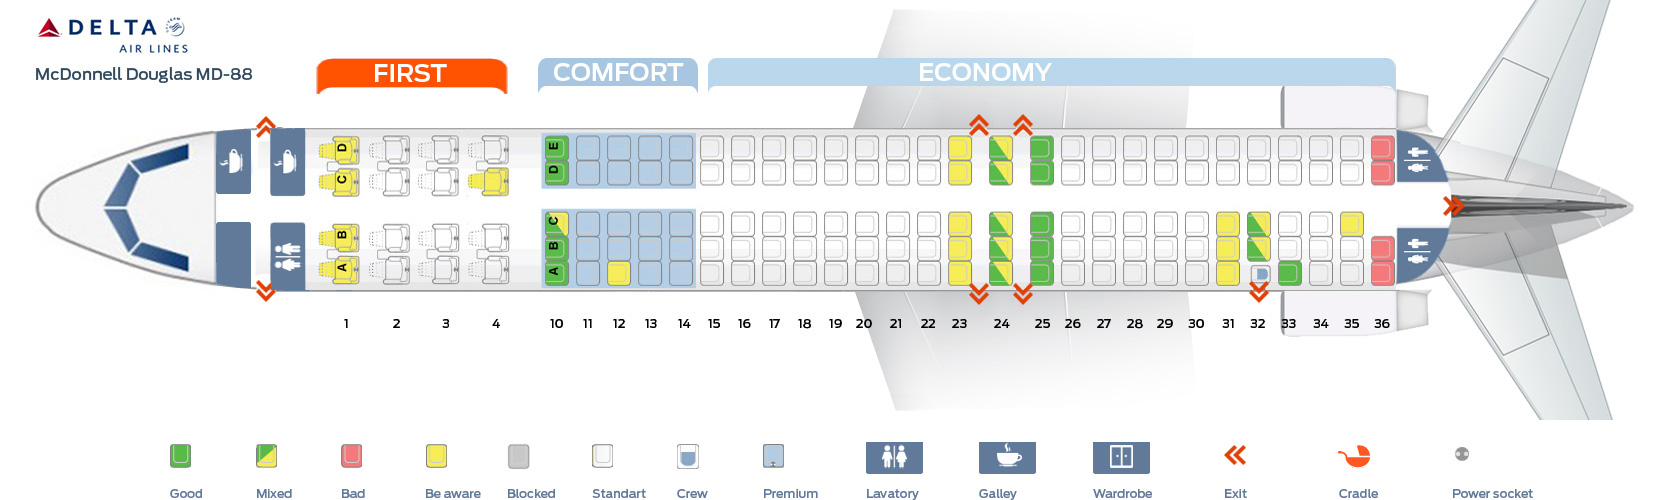 Seat map McDonnell Douglas MD-88 Delta Airlines. Best seats ...